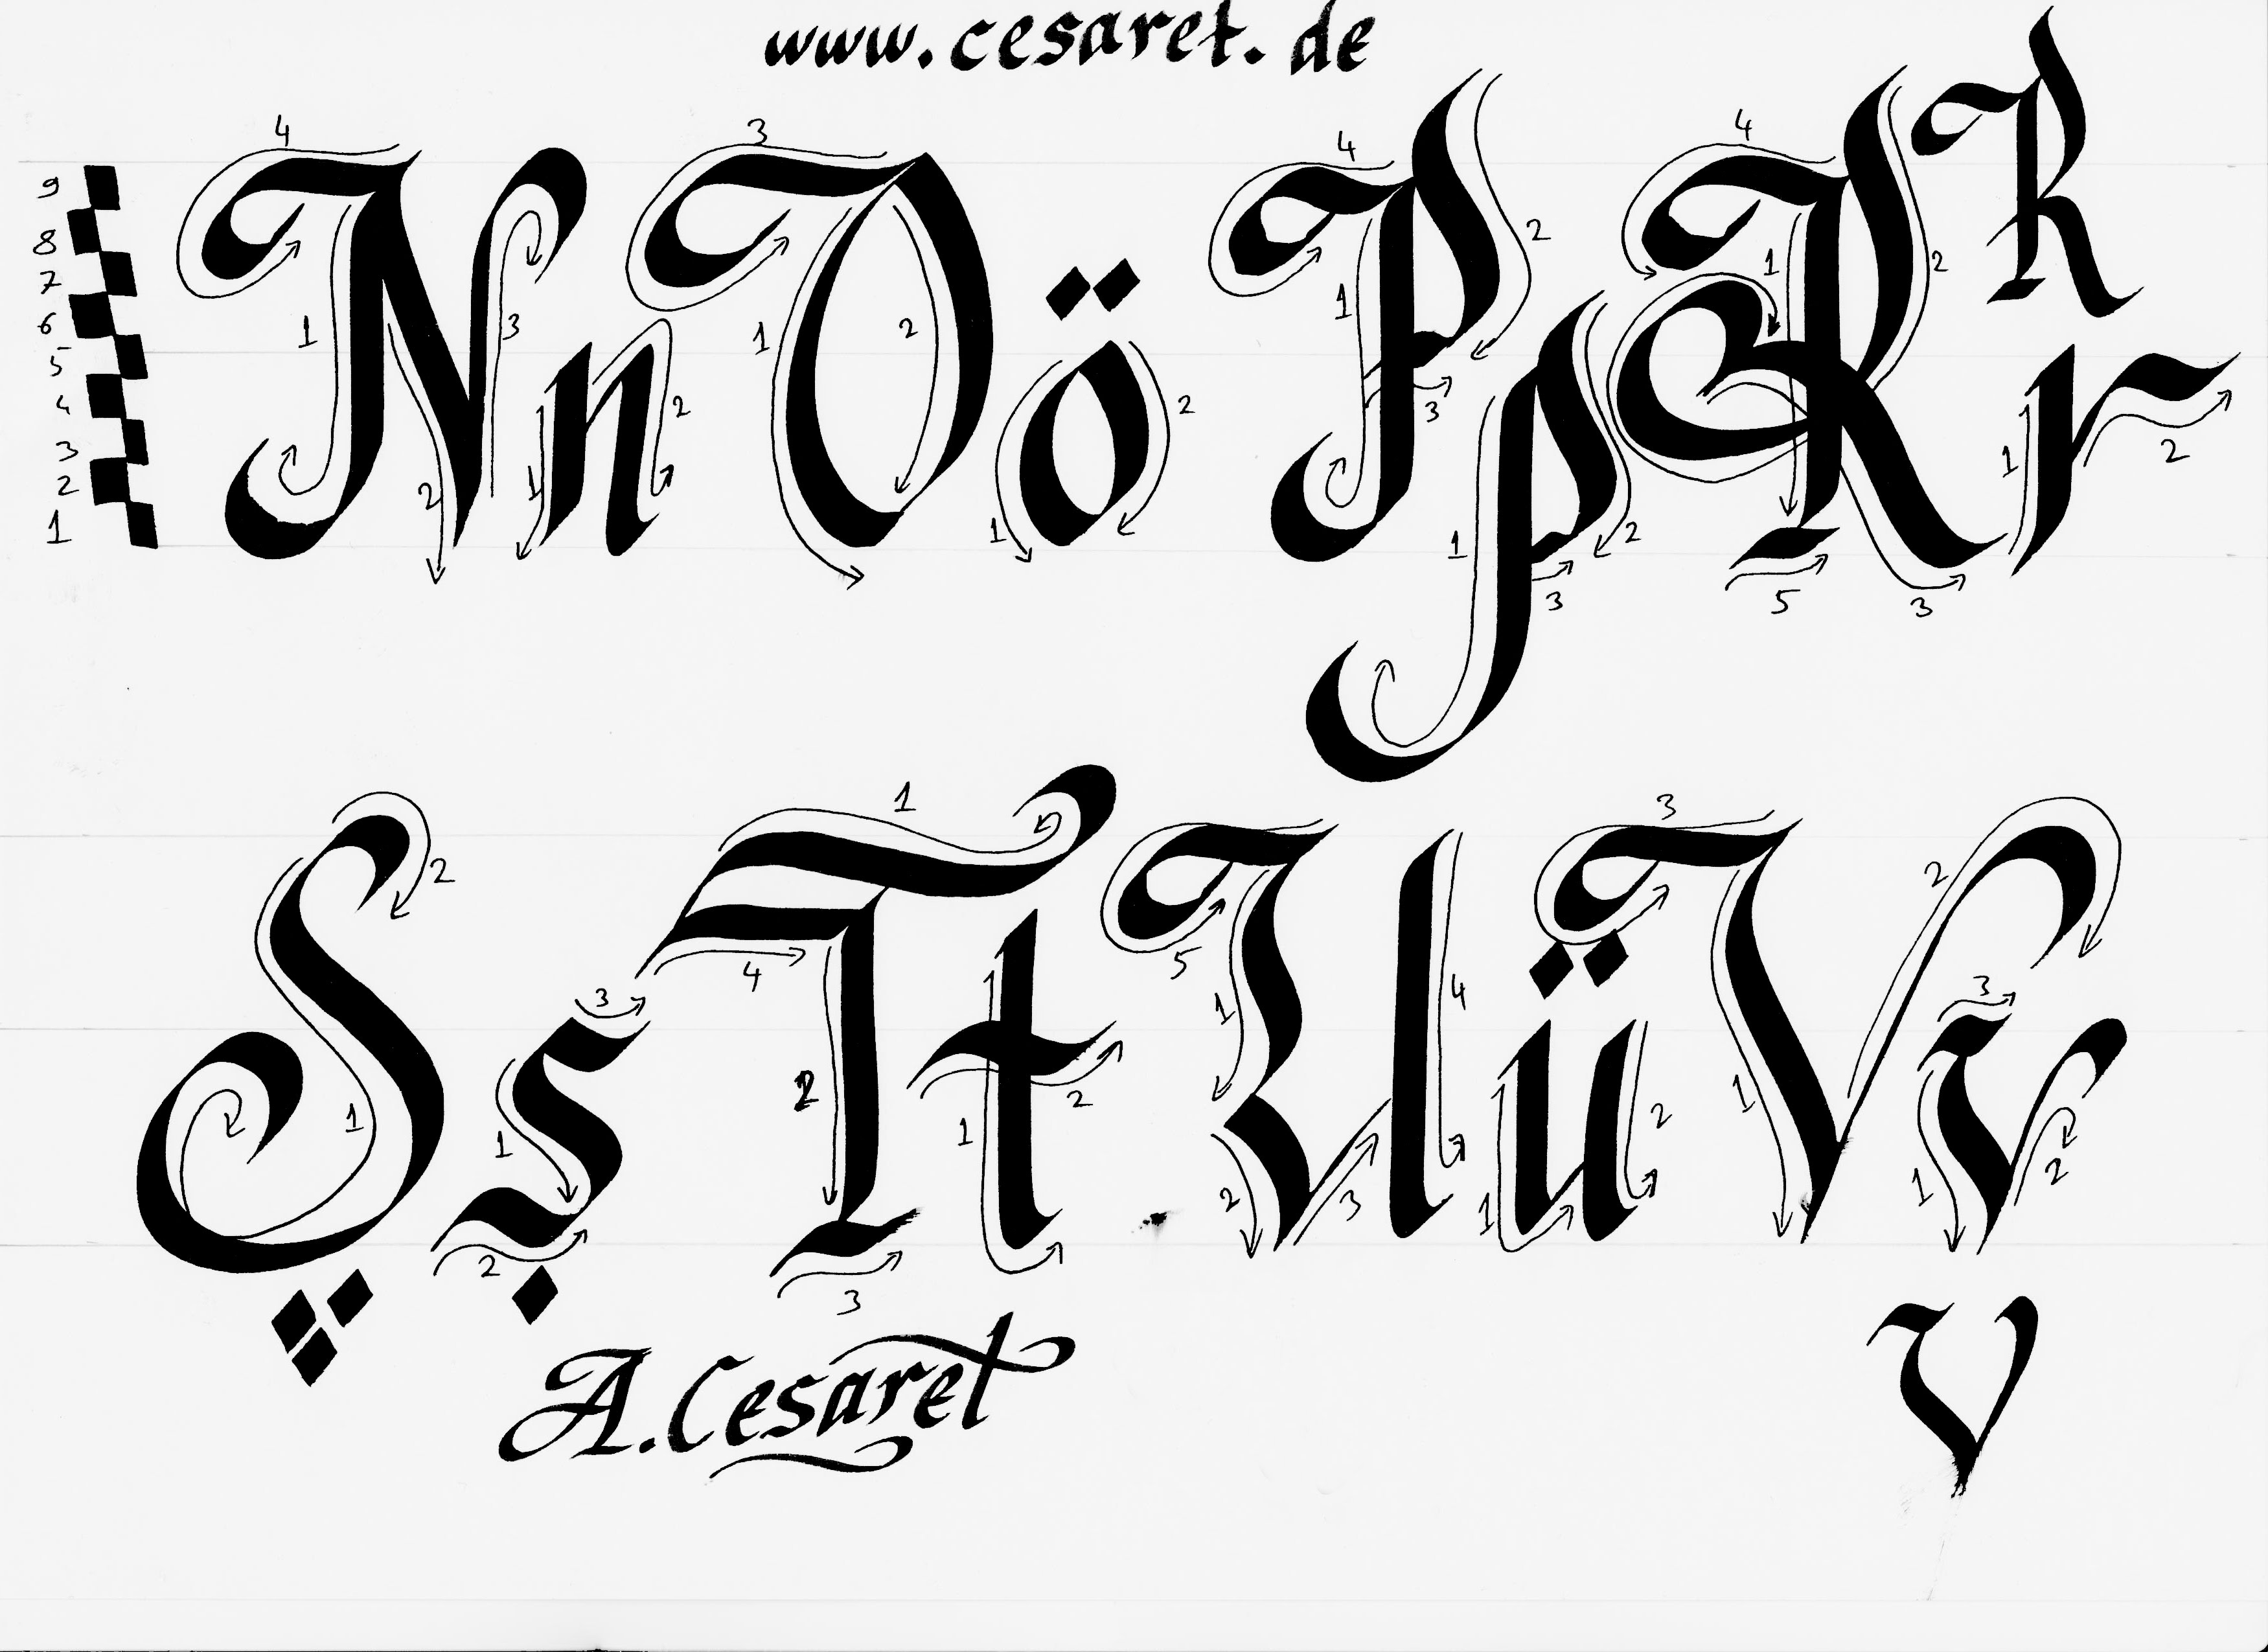 Abdurrahman Cesaret Kaligrafi Harfleri - HD Wallpaper 